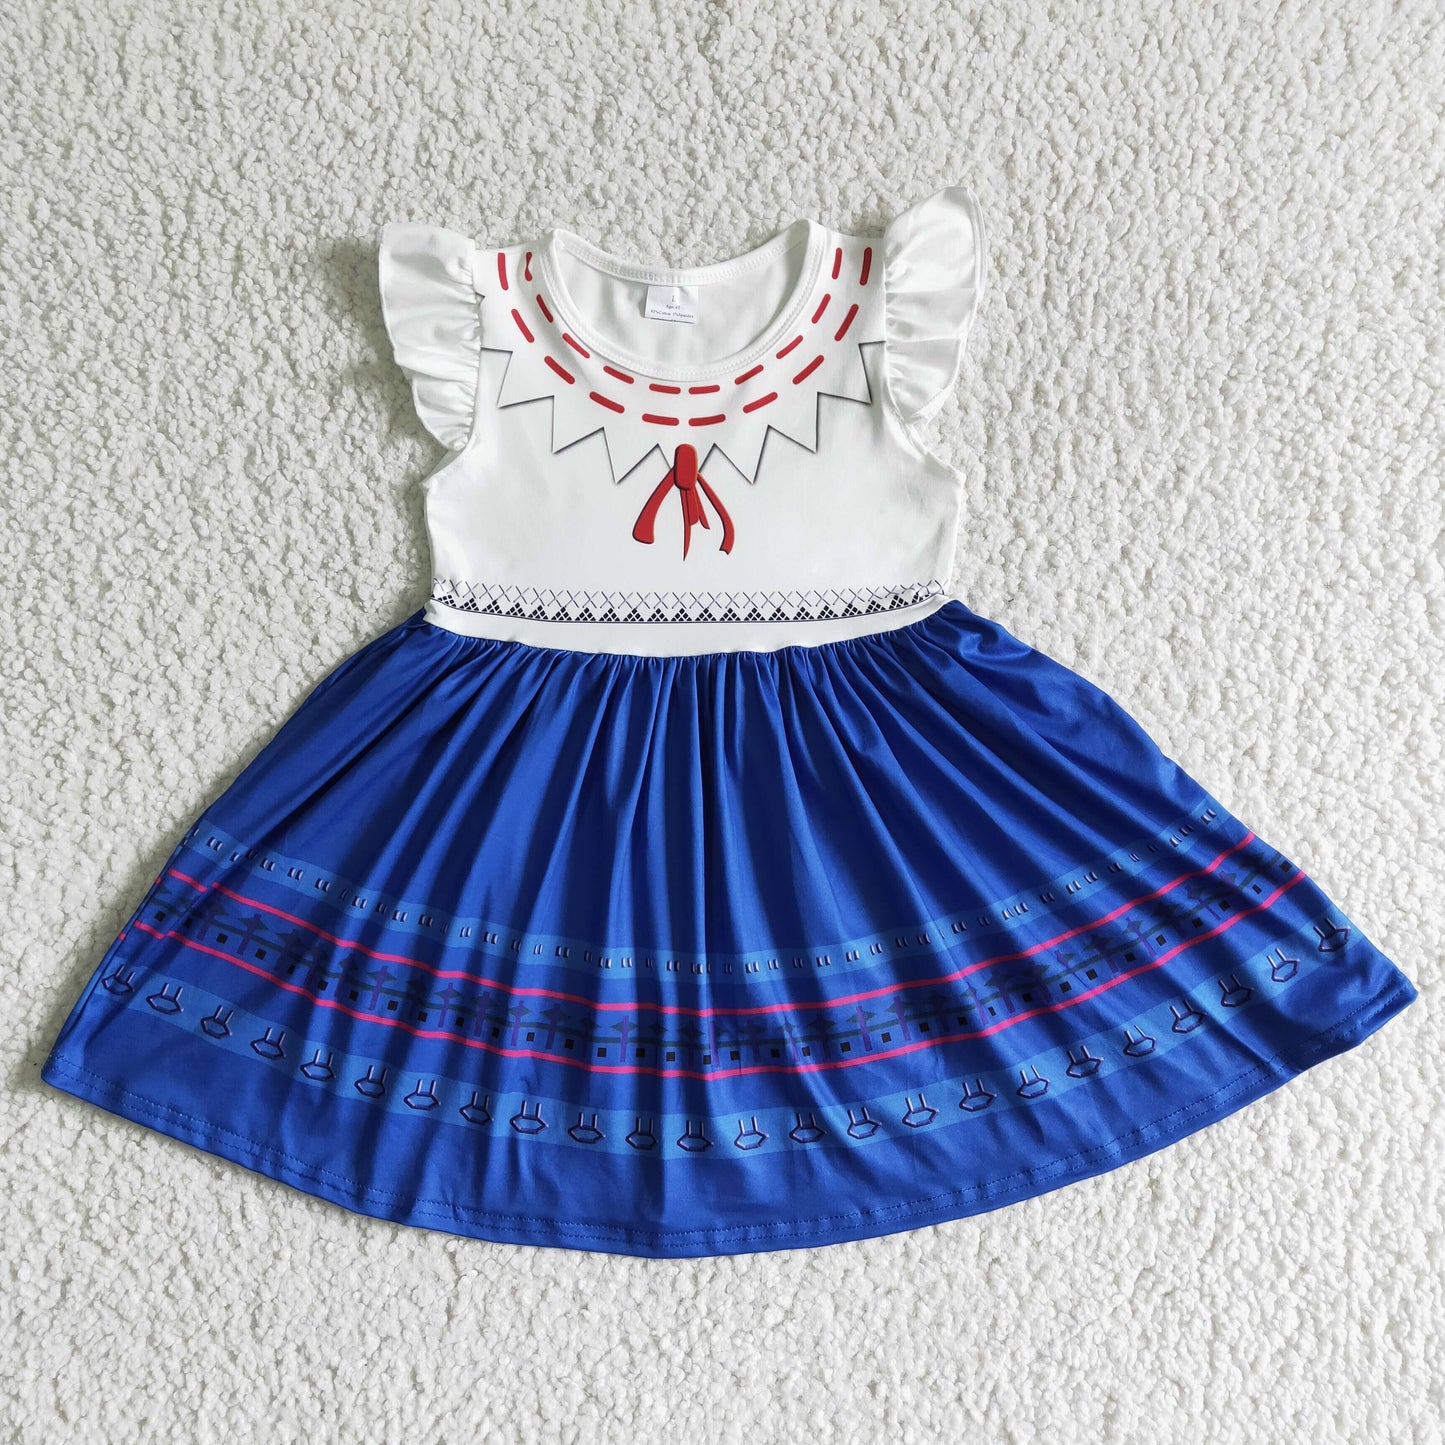 kids baby girl's dress summer clothing